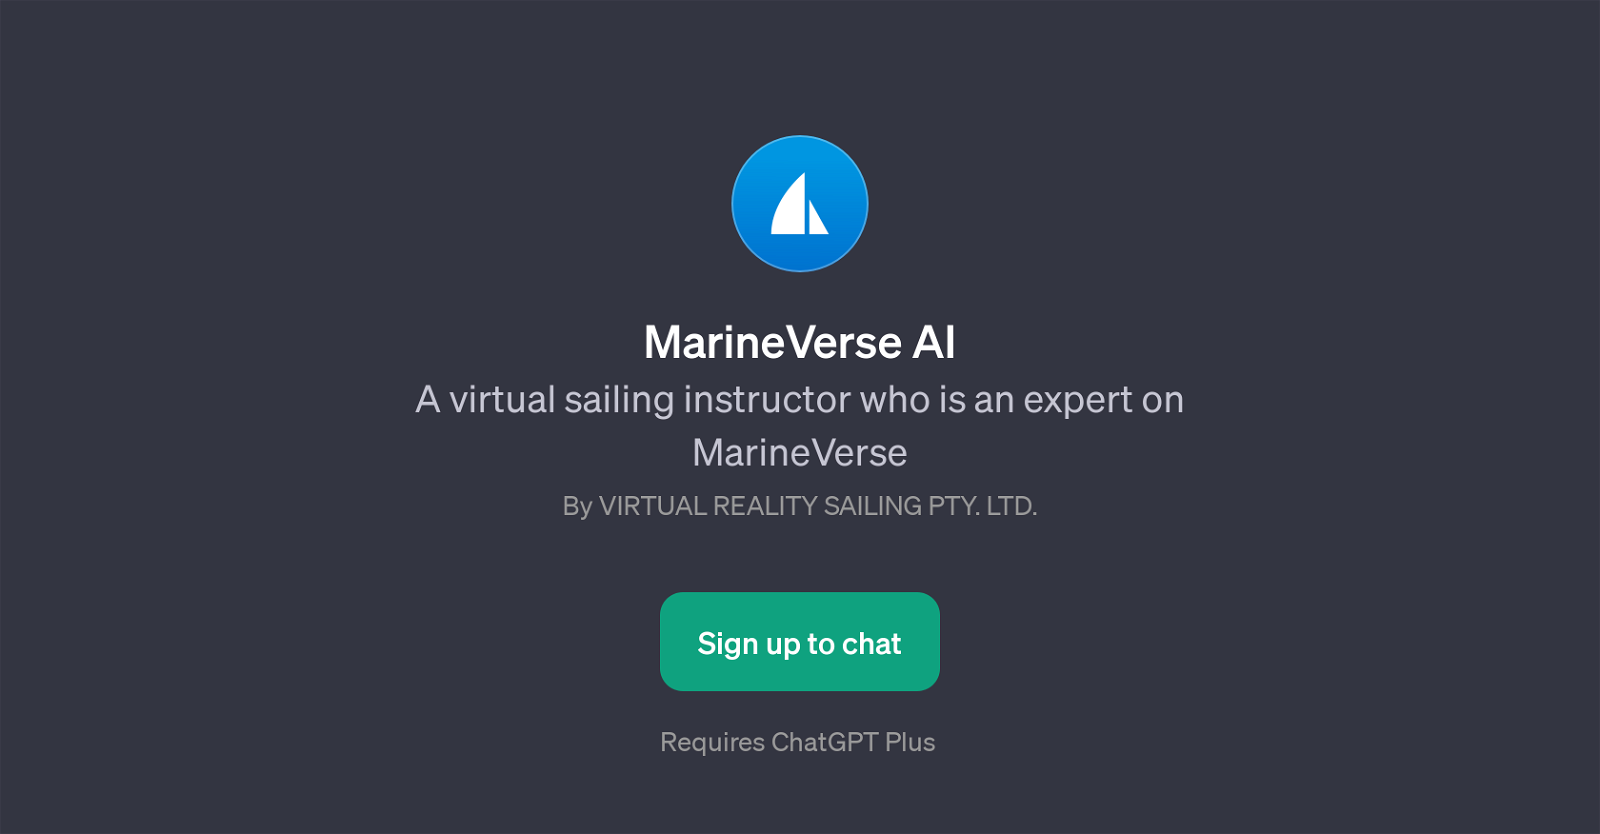 MarineVerse AI website